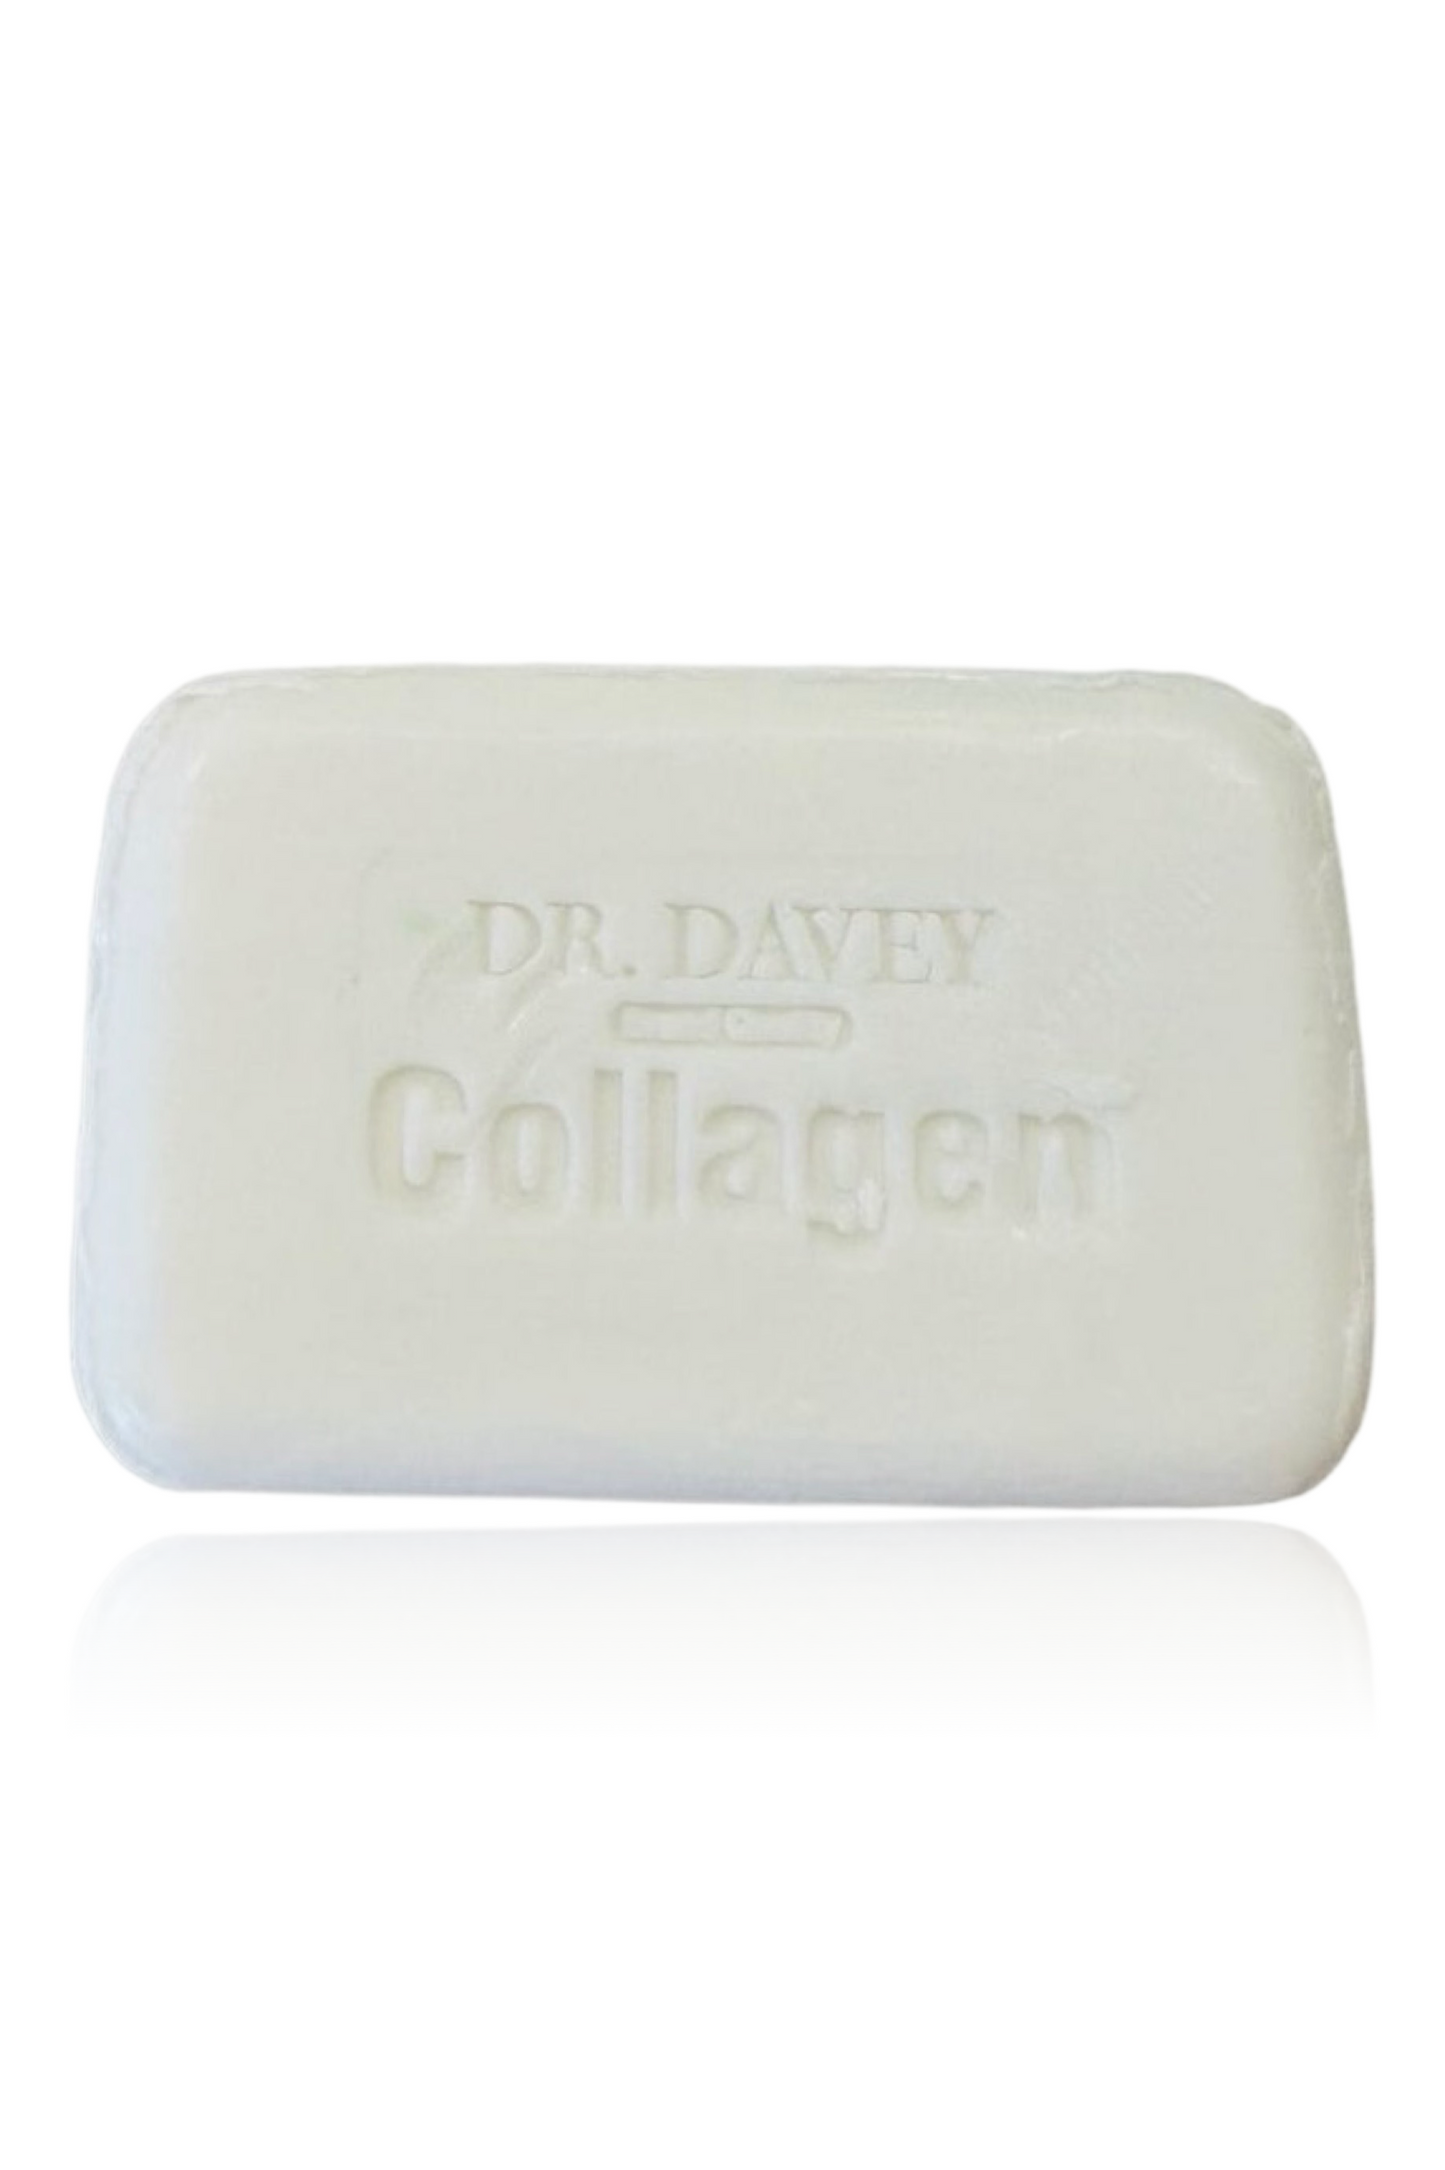 jabón facial Dr. Davey Collagen Whitening Soap 100g